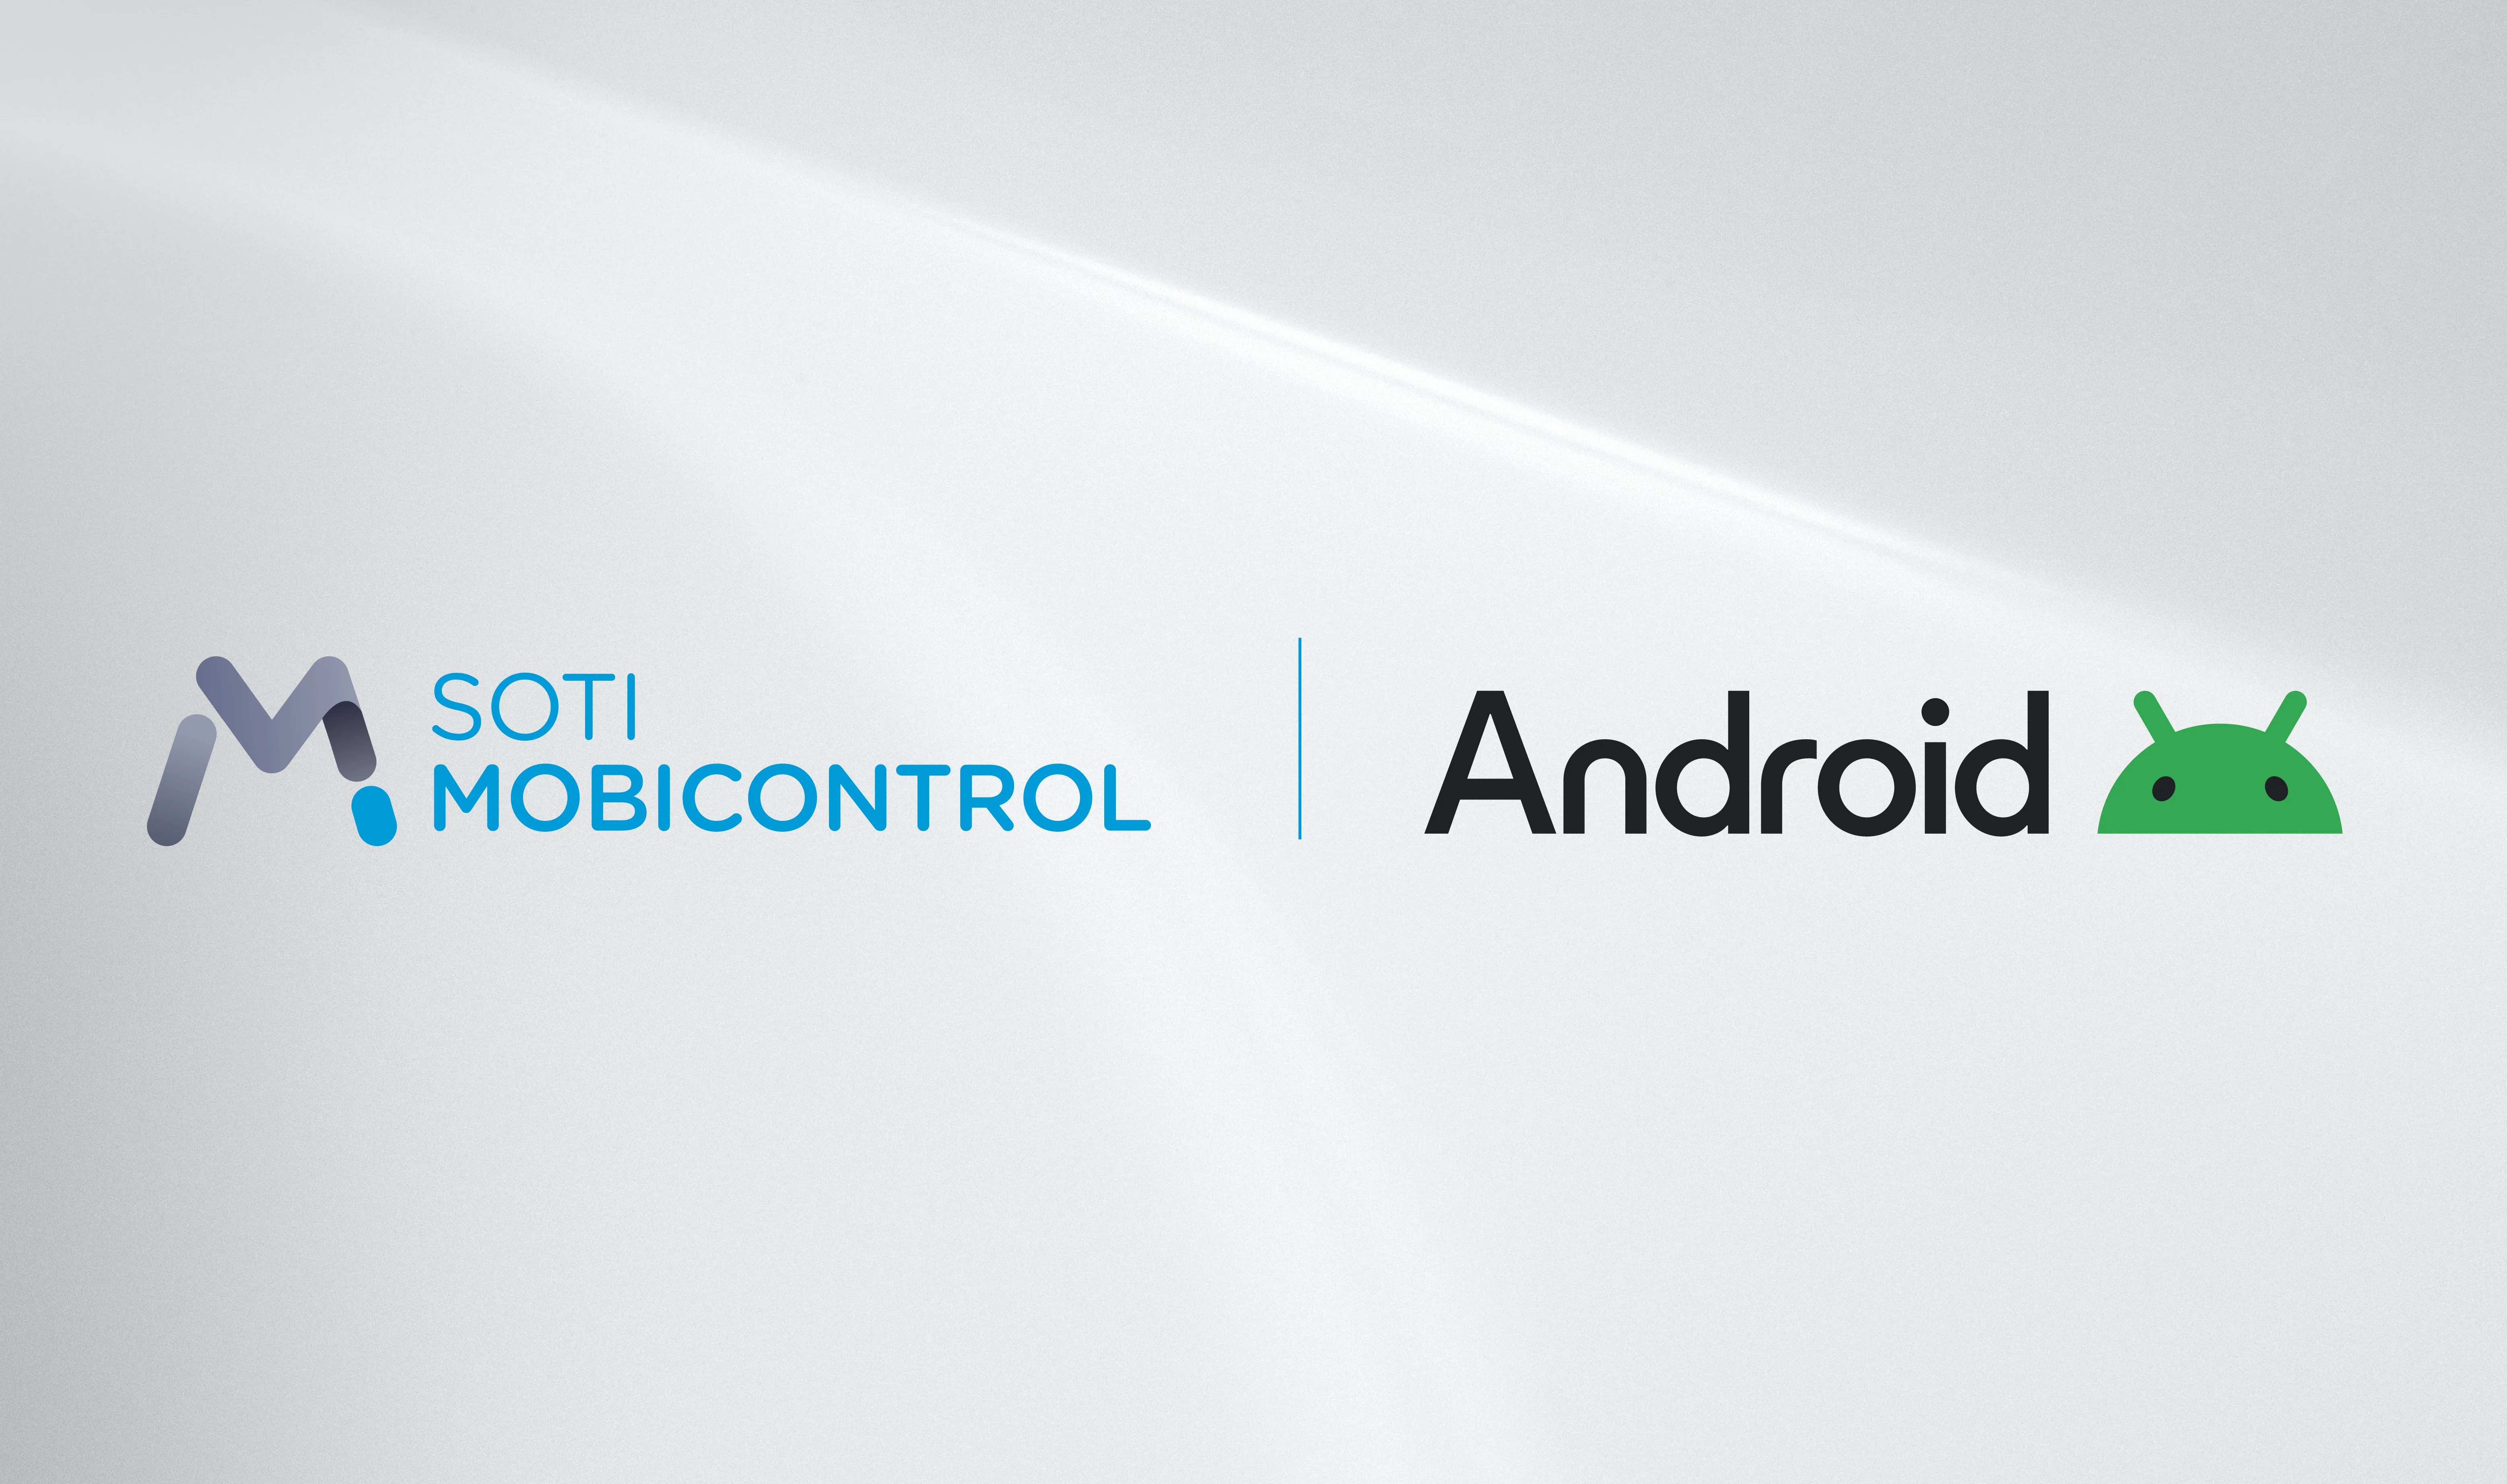 SOTI MobiControl Supports Android Enterprise Management | SOTI